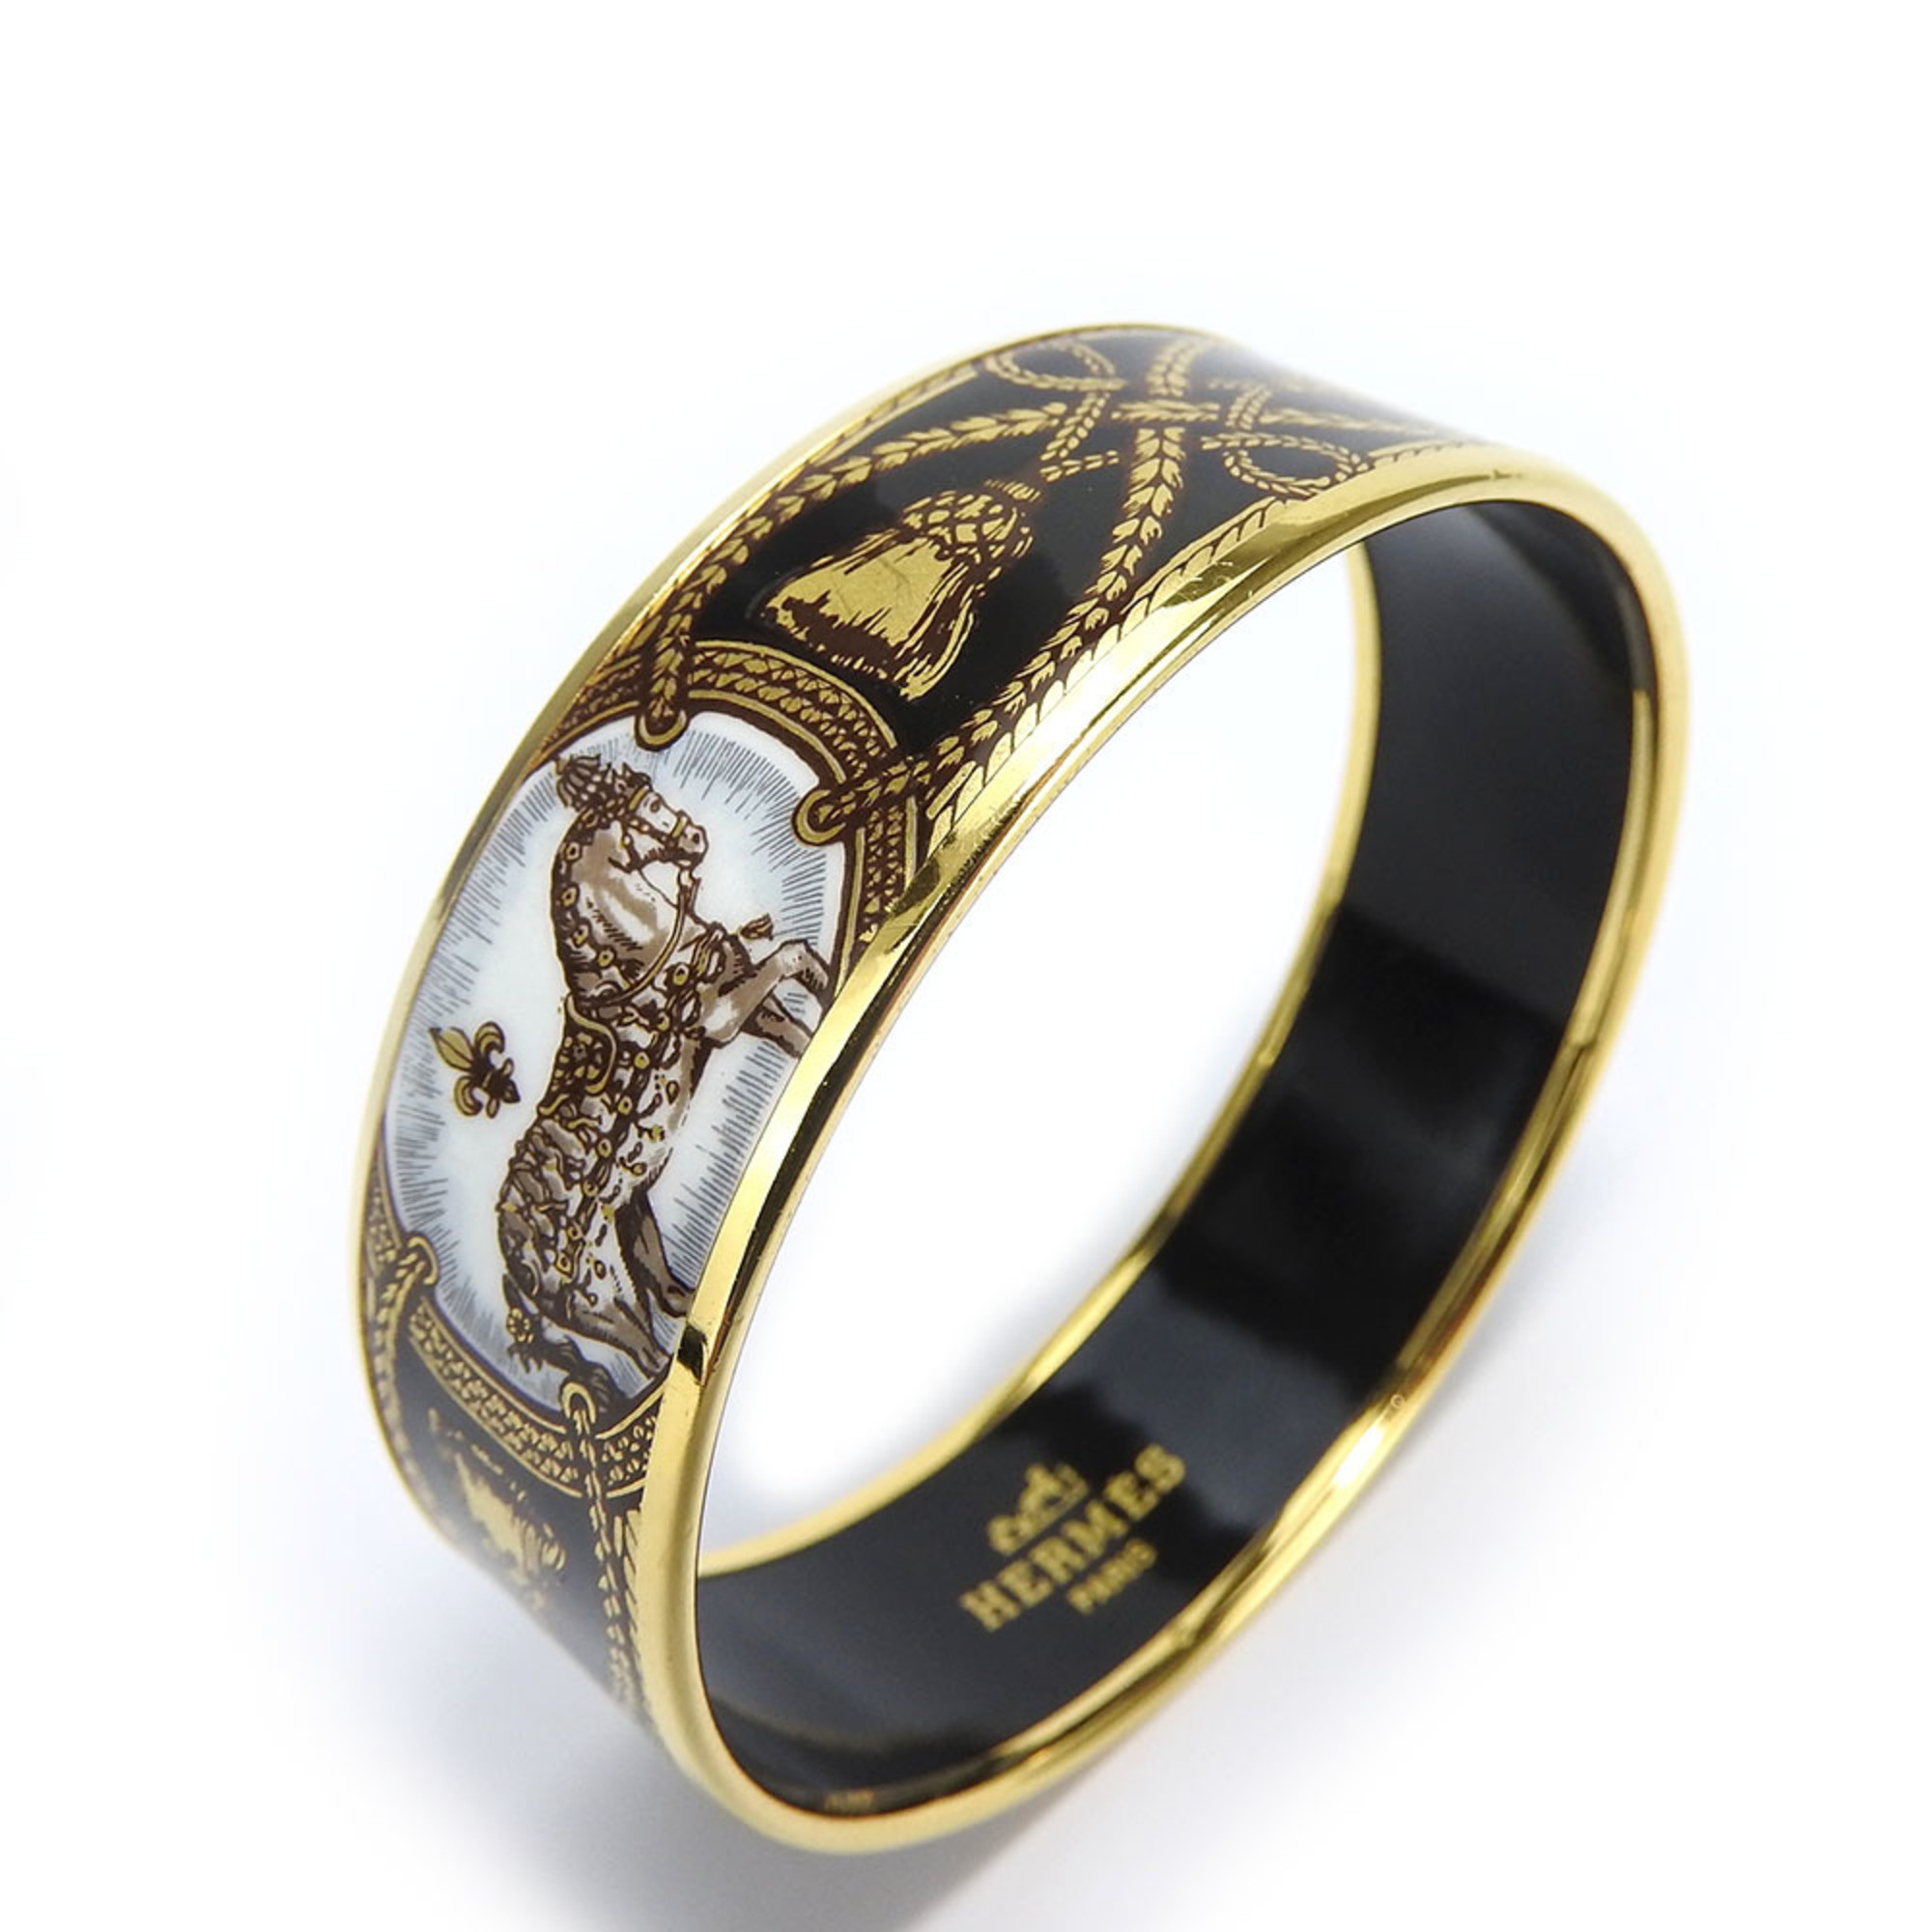 Hermes bracelet enamel GM metal cloisonné multicolor gold black horse women's HERMES